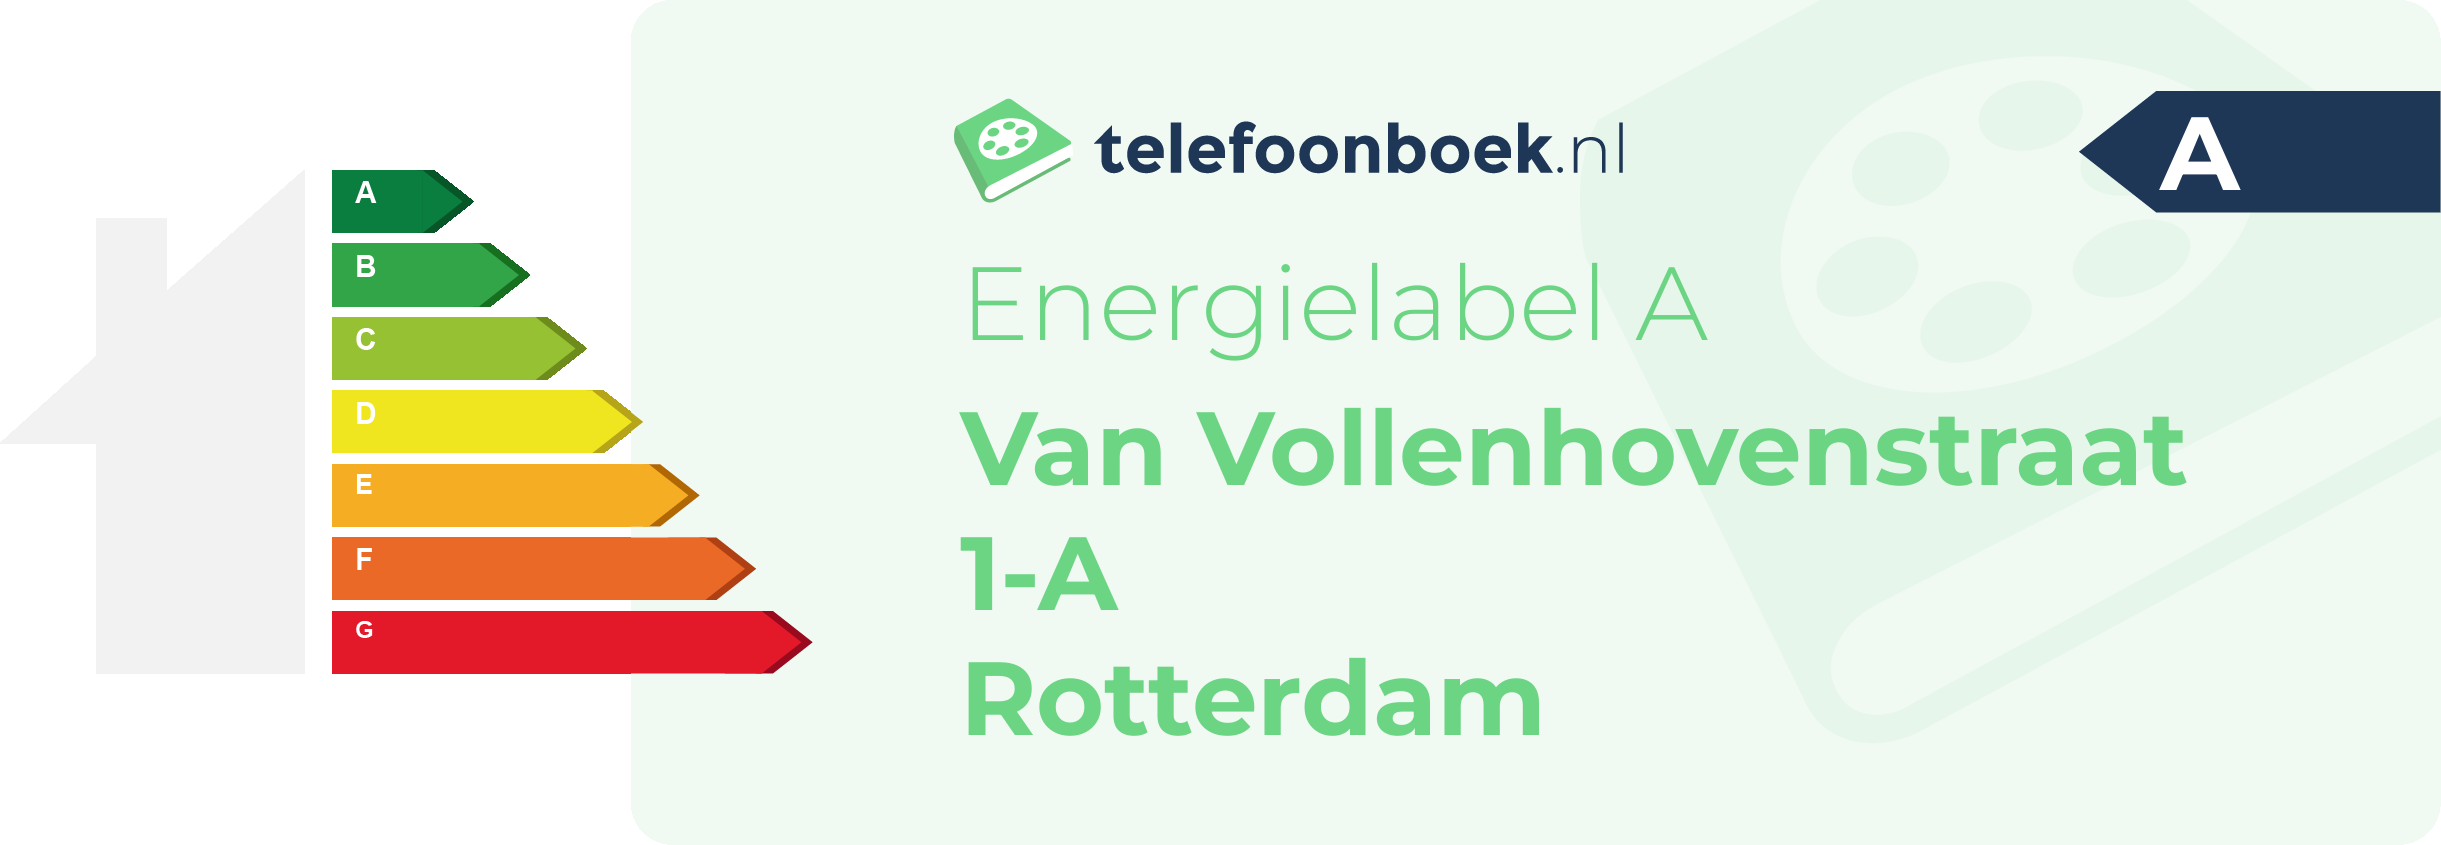 Energielabel Van Vollenhovenstraat 1-A Rotterdam